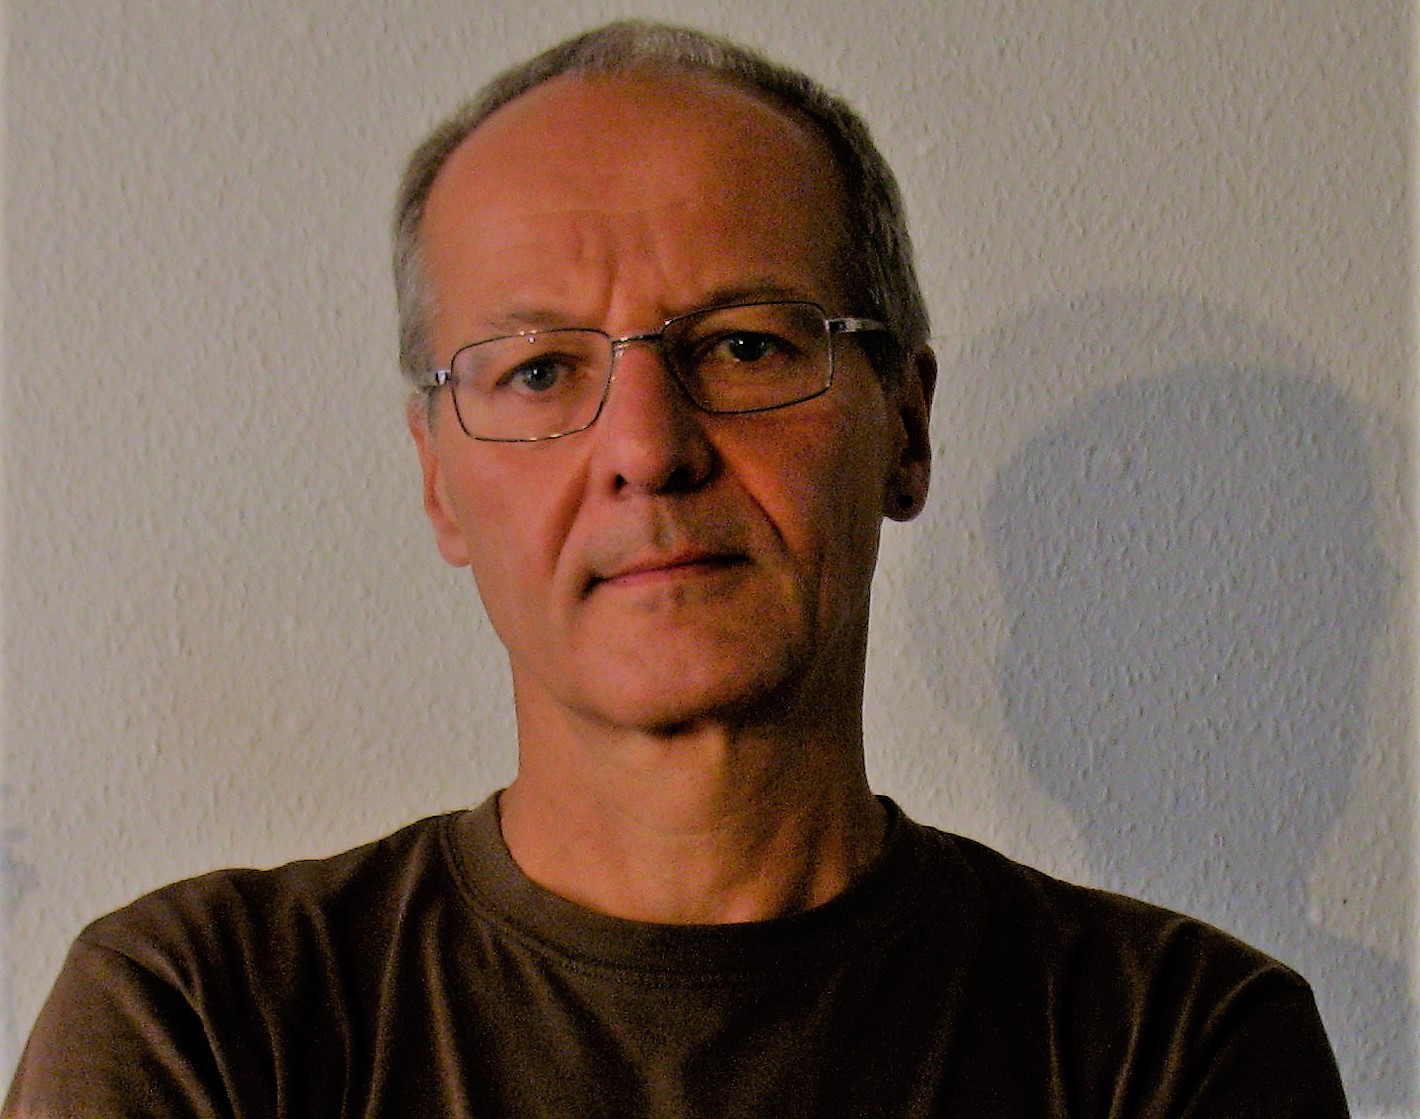 Dr. Andreas Thiele